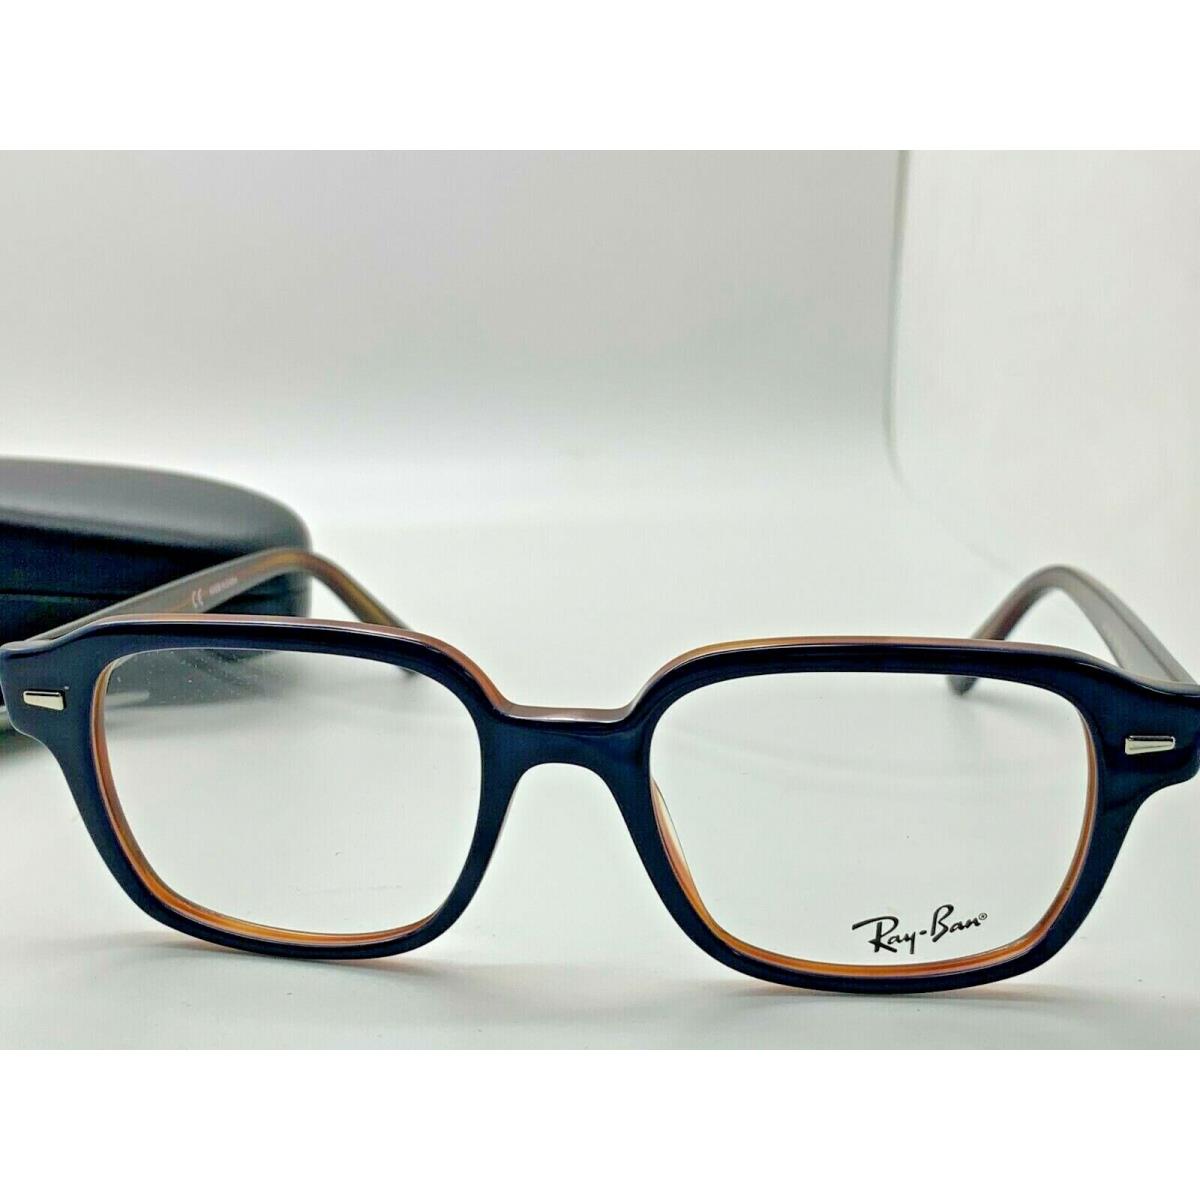 Ray-Ban eyeglasses  - Frame: DARK BLUE ON HAVANA 0